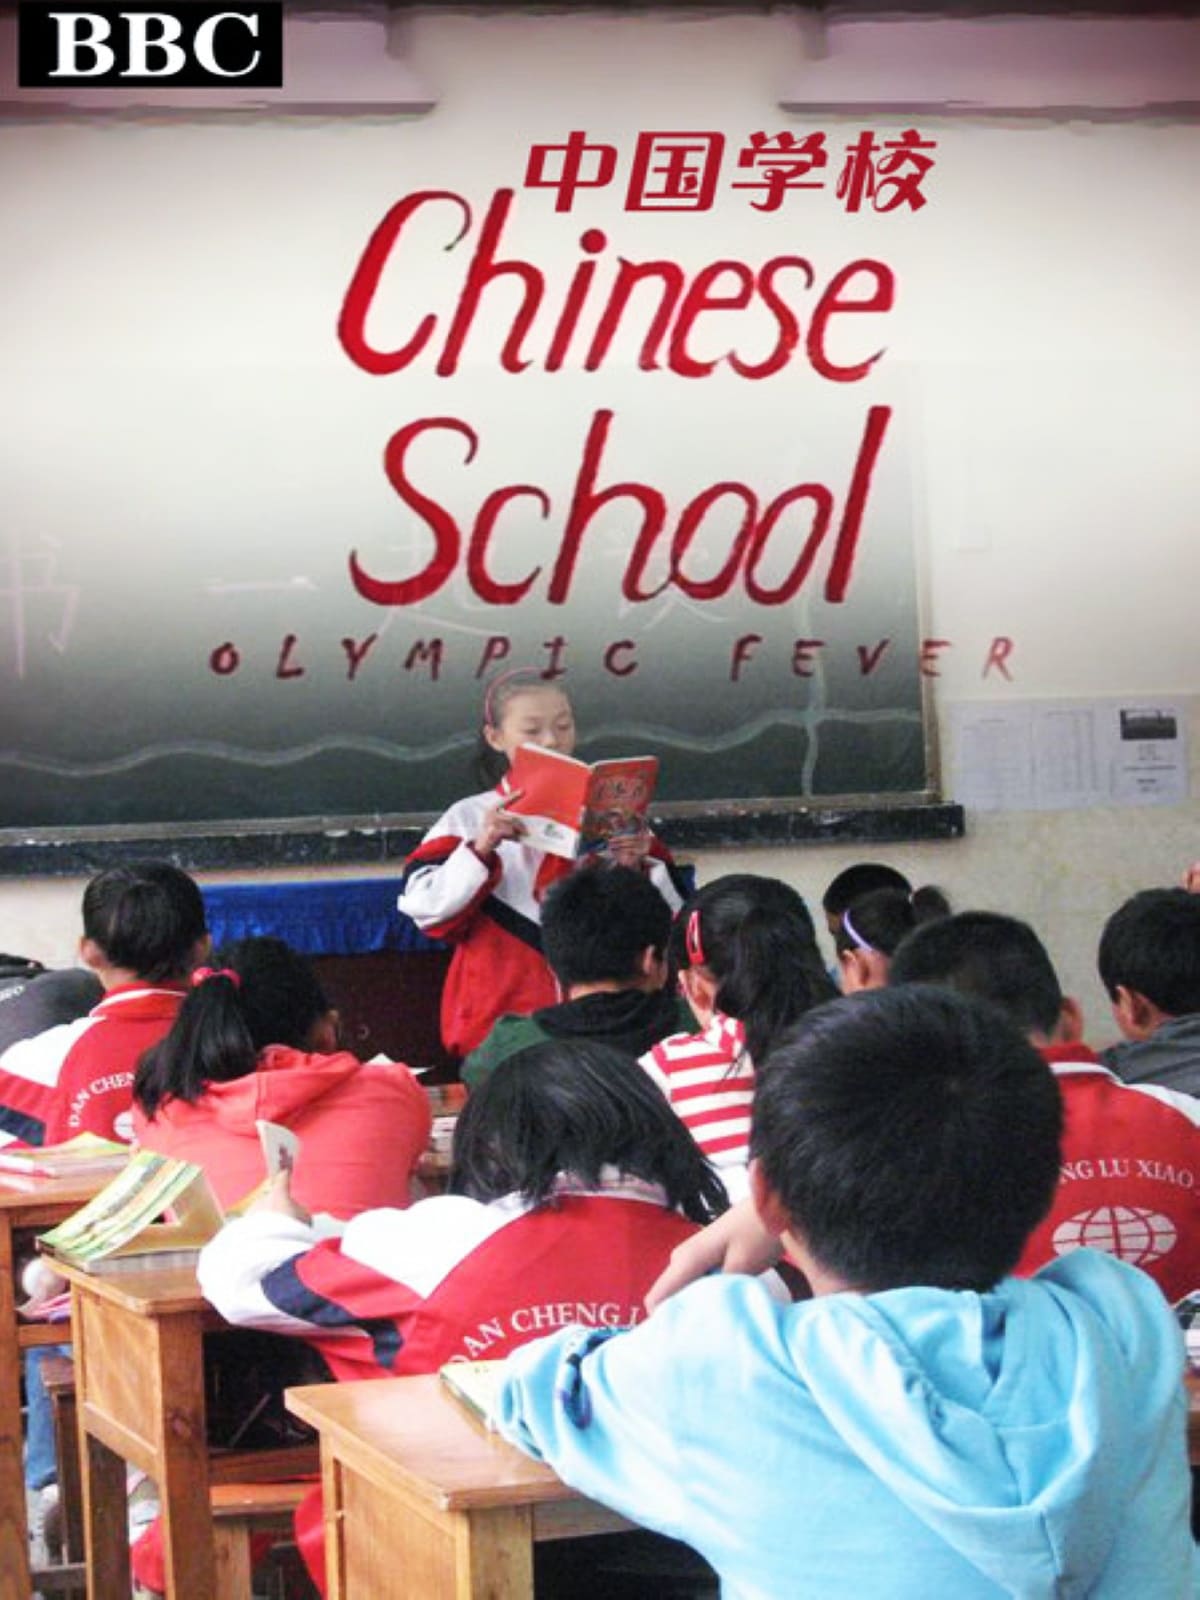 Chinese School